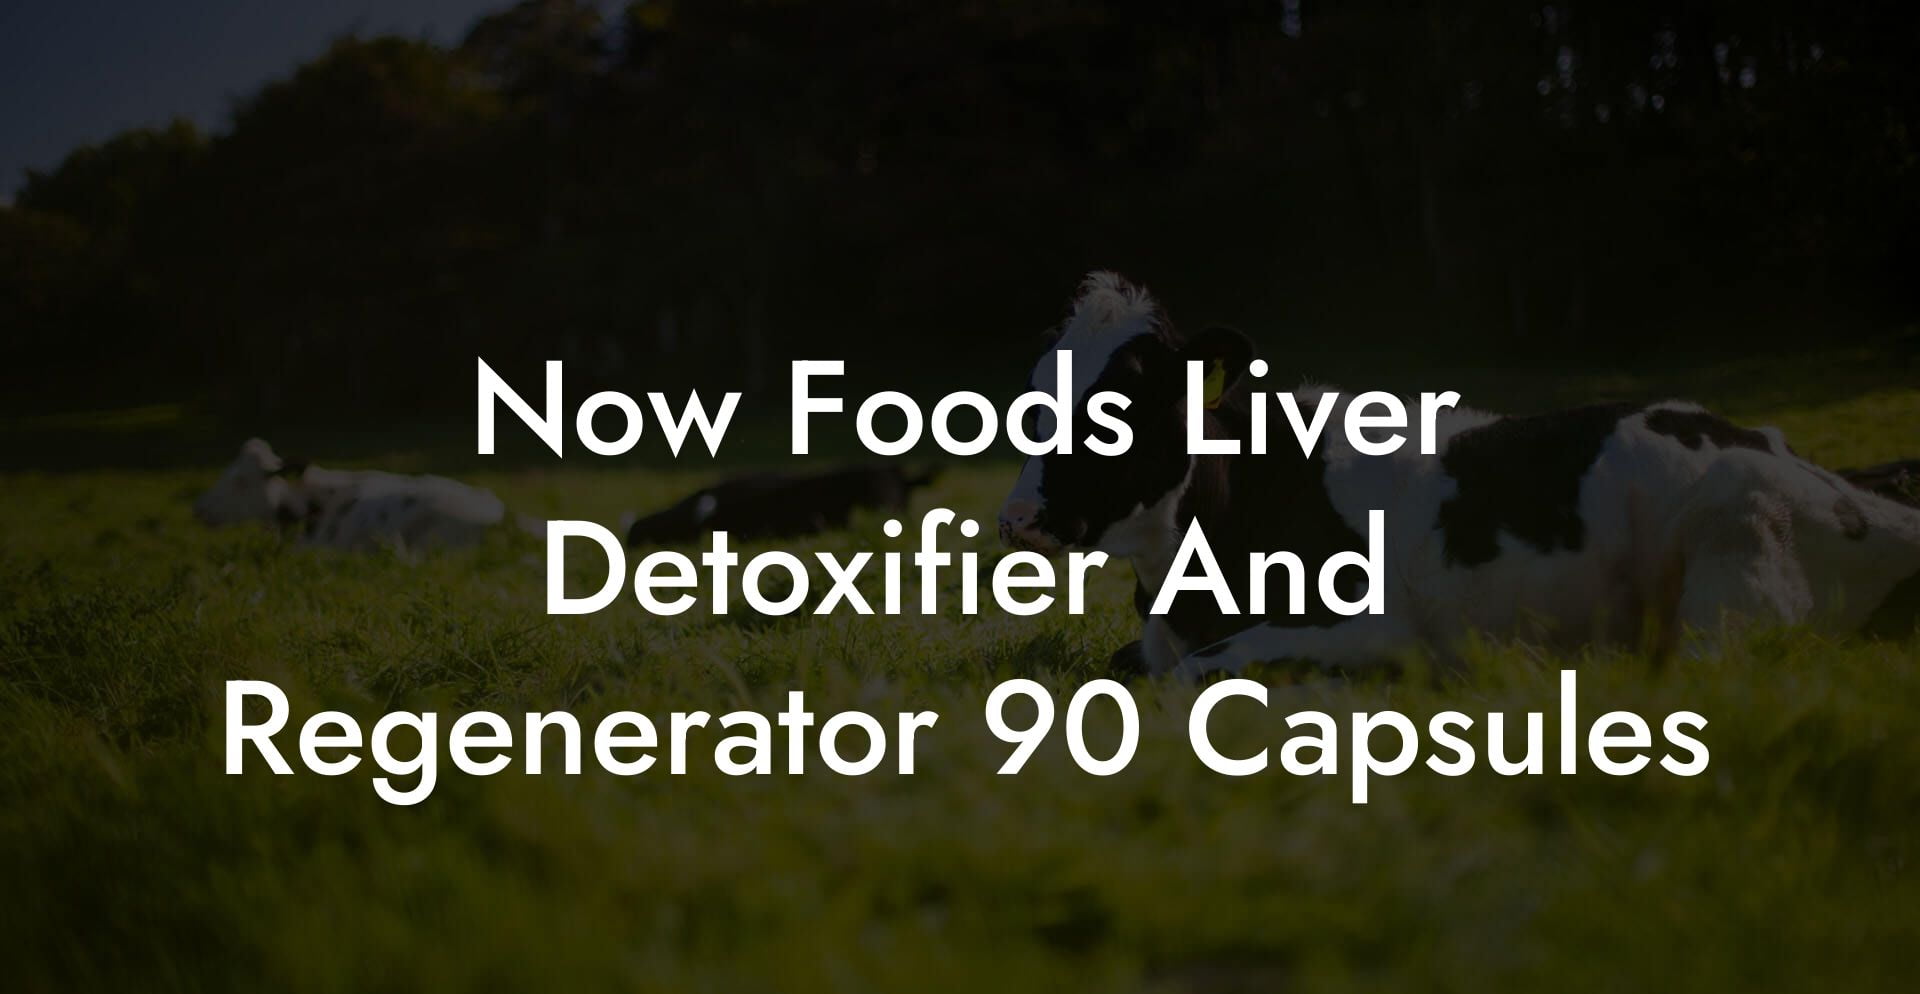 Now Foods Liver Detoxifier And Regenerator 90 Capsules